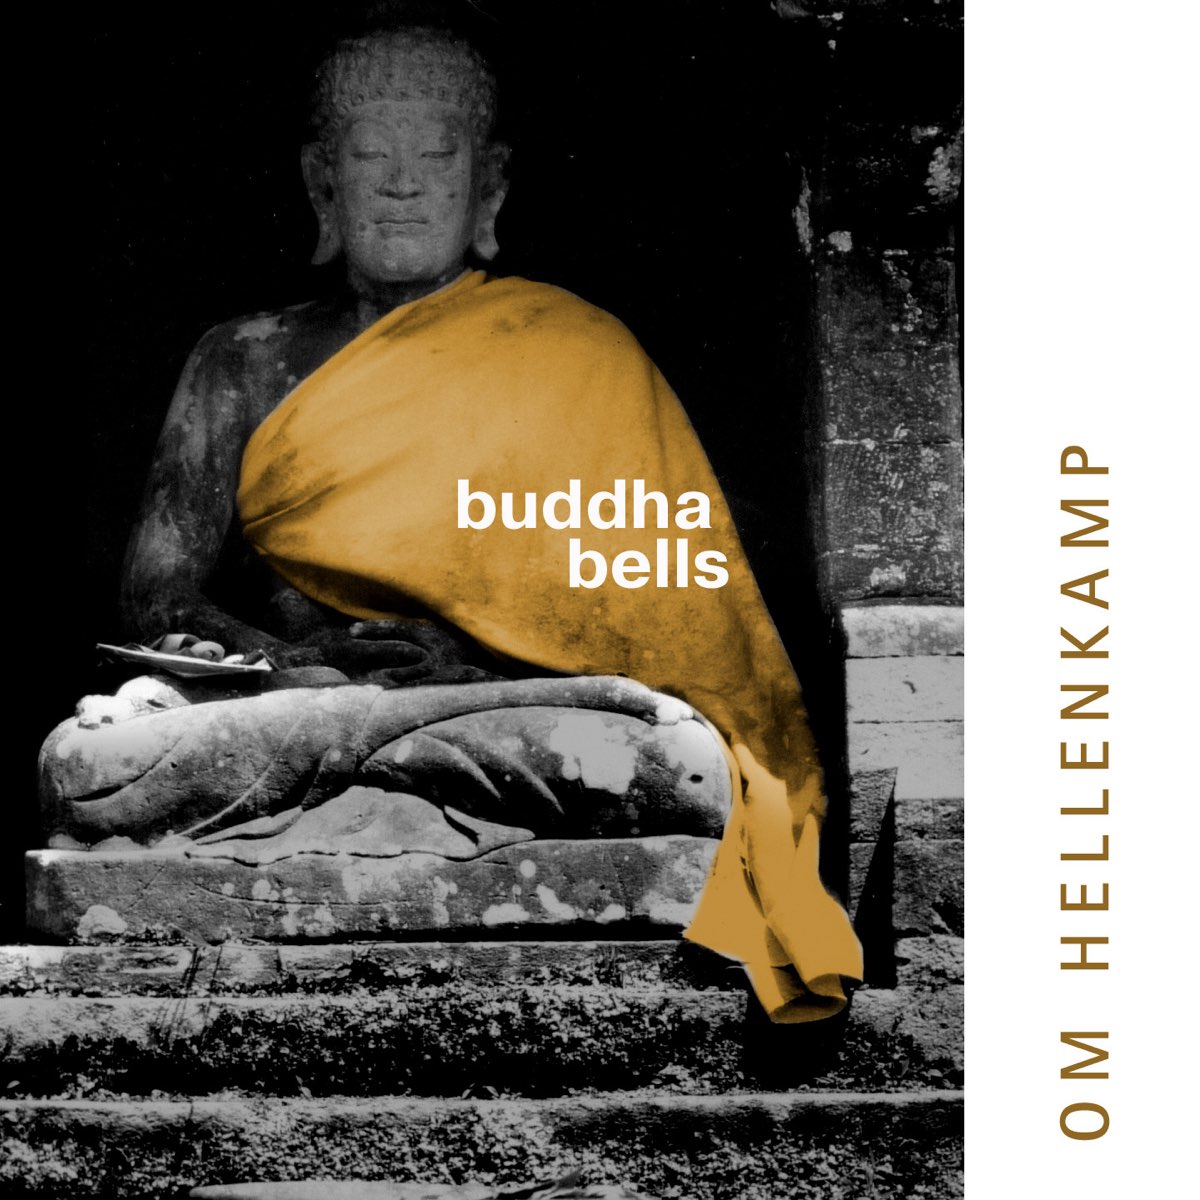 Deuter - Buddha nature альбом. Buddhist Bells. Buddhist Bell big. Будда слушает аудиокнига